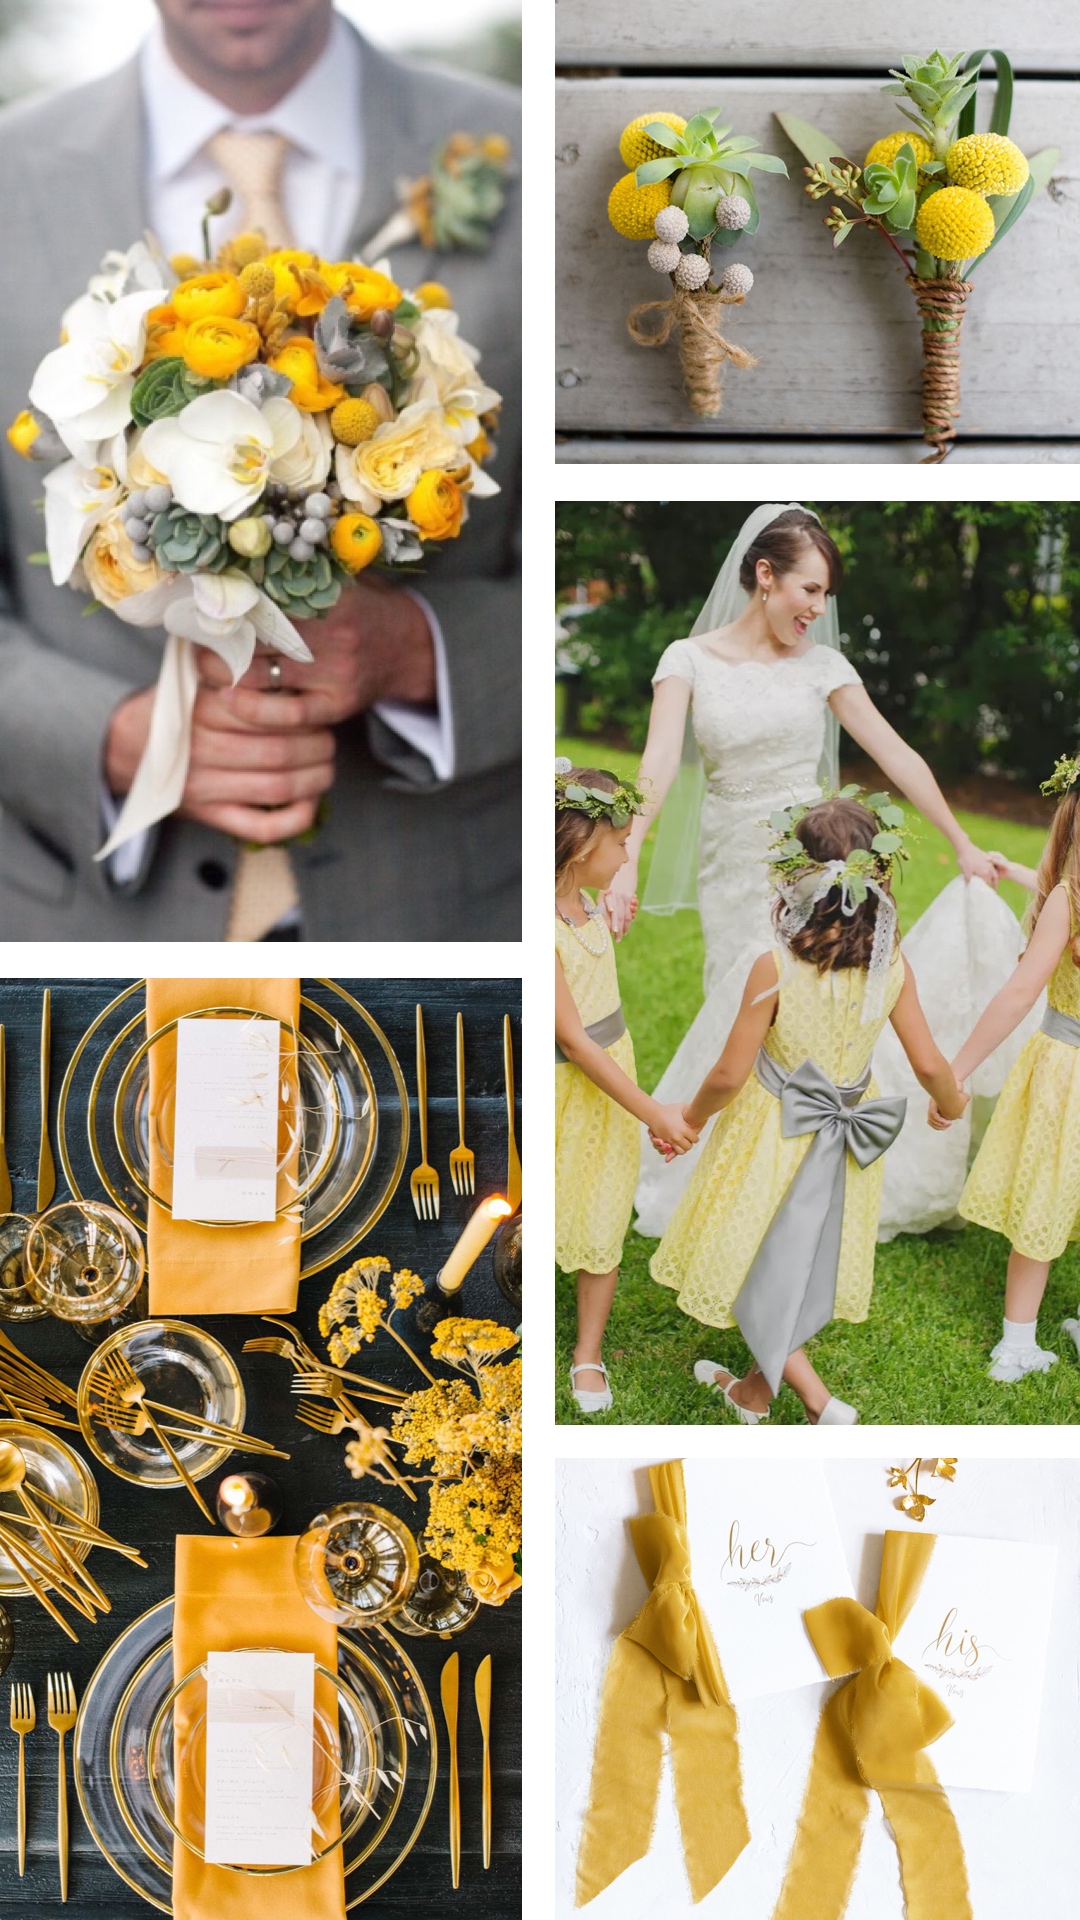 Blog | Pantone - Barva roku 2021 
Svatební agentura SimplyYes